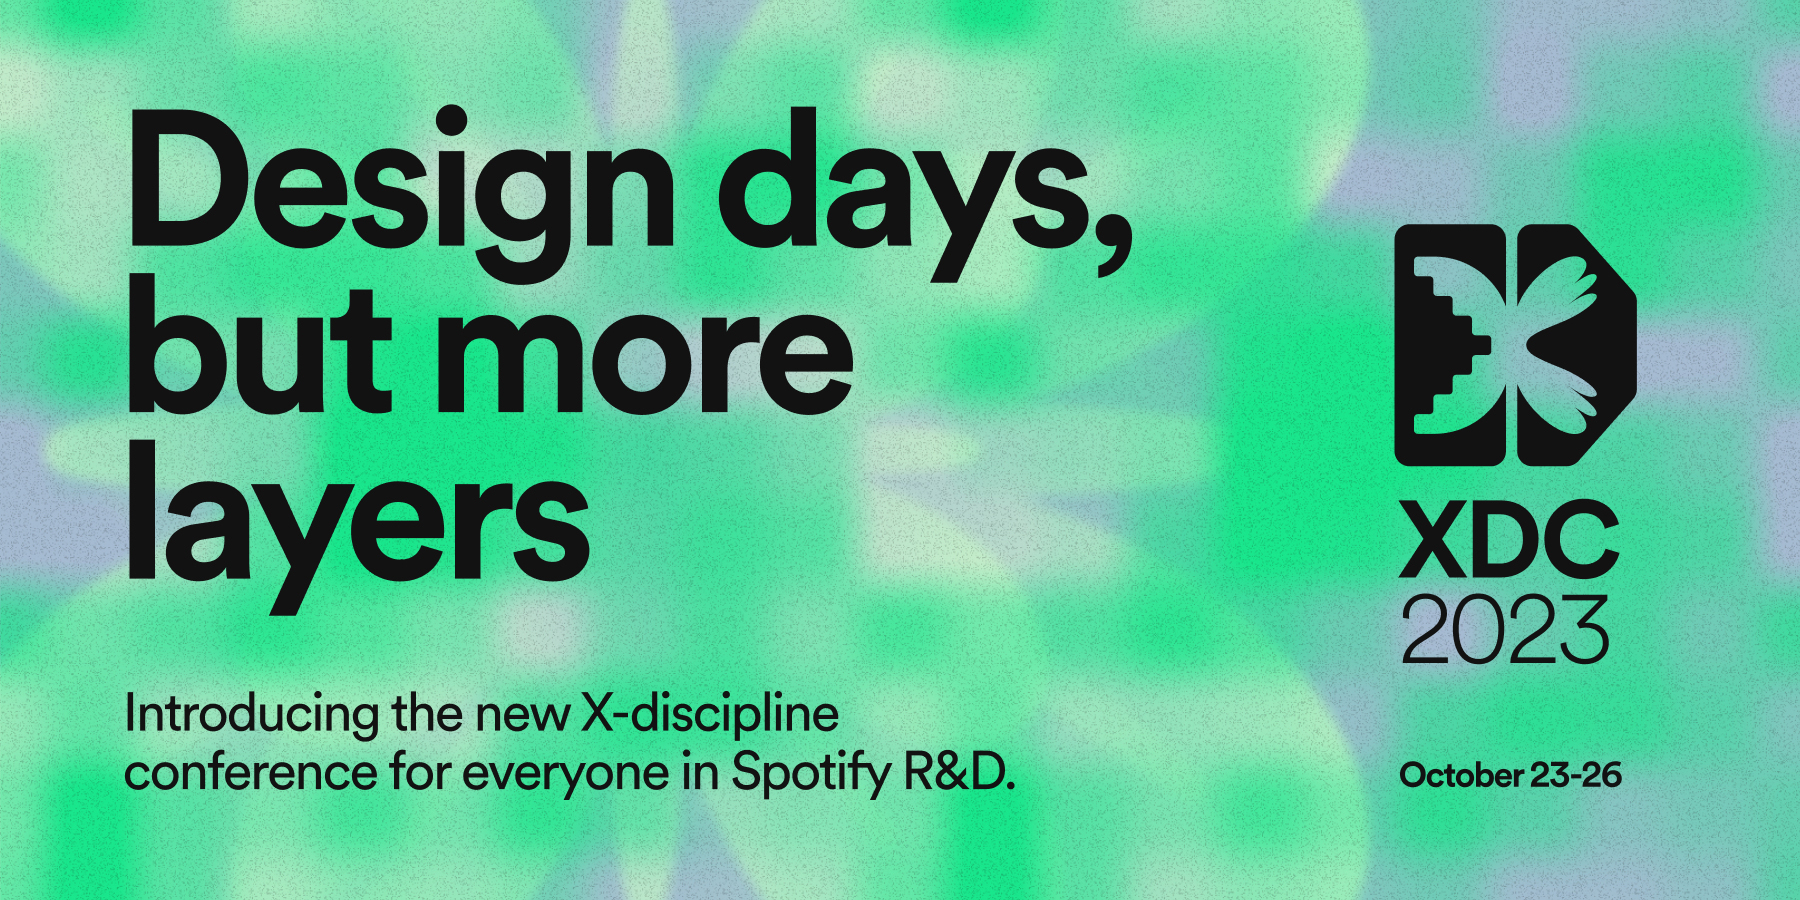 Spotify XDC 2023 logo and communications design